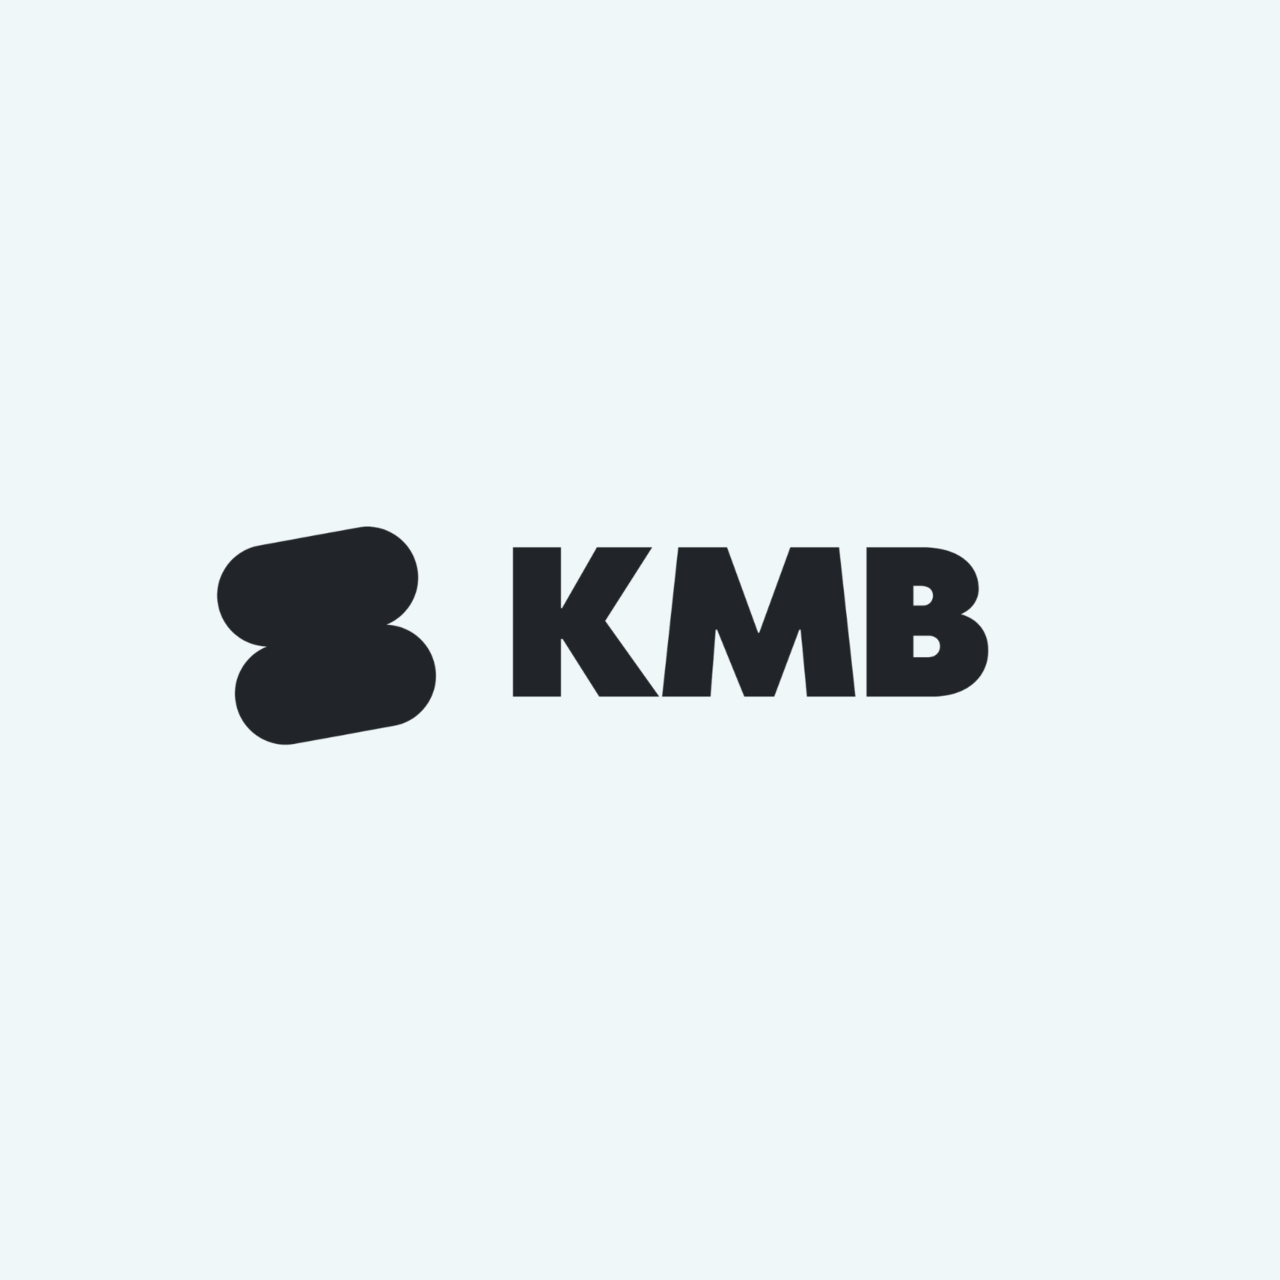 KMB's Substack